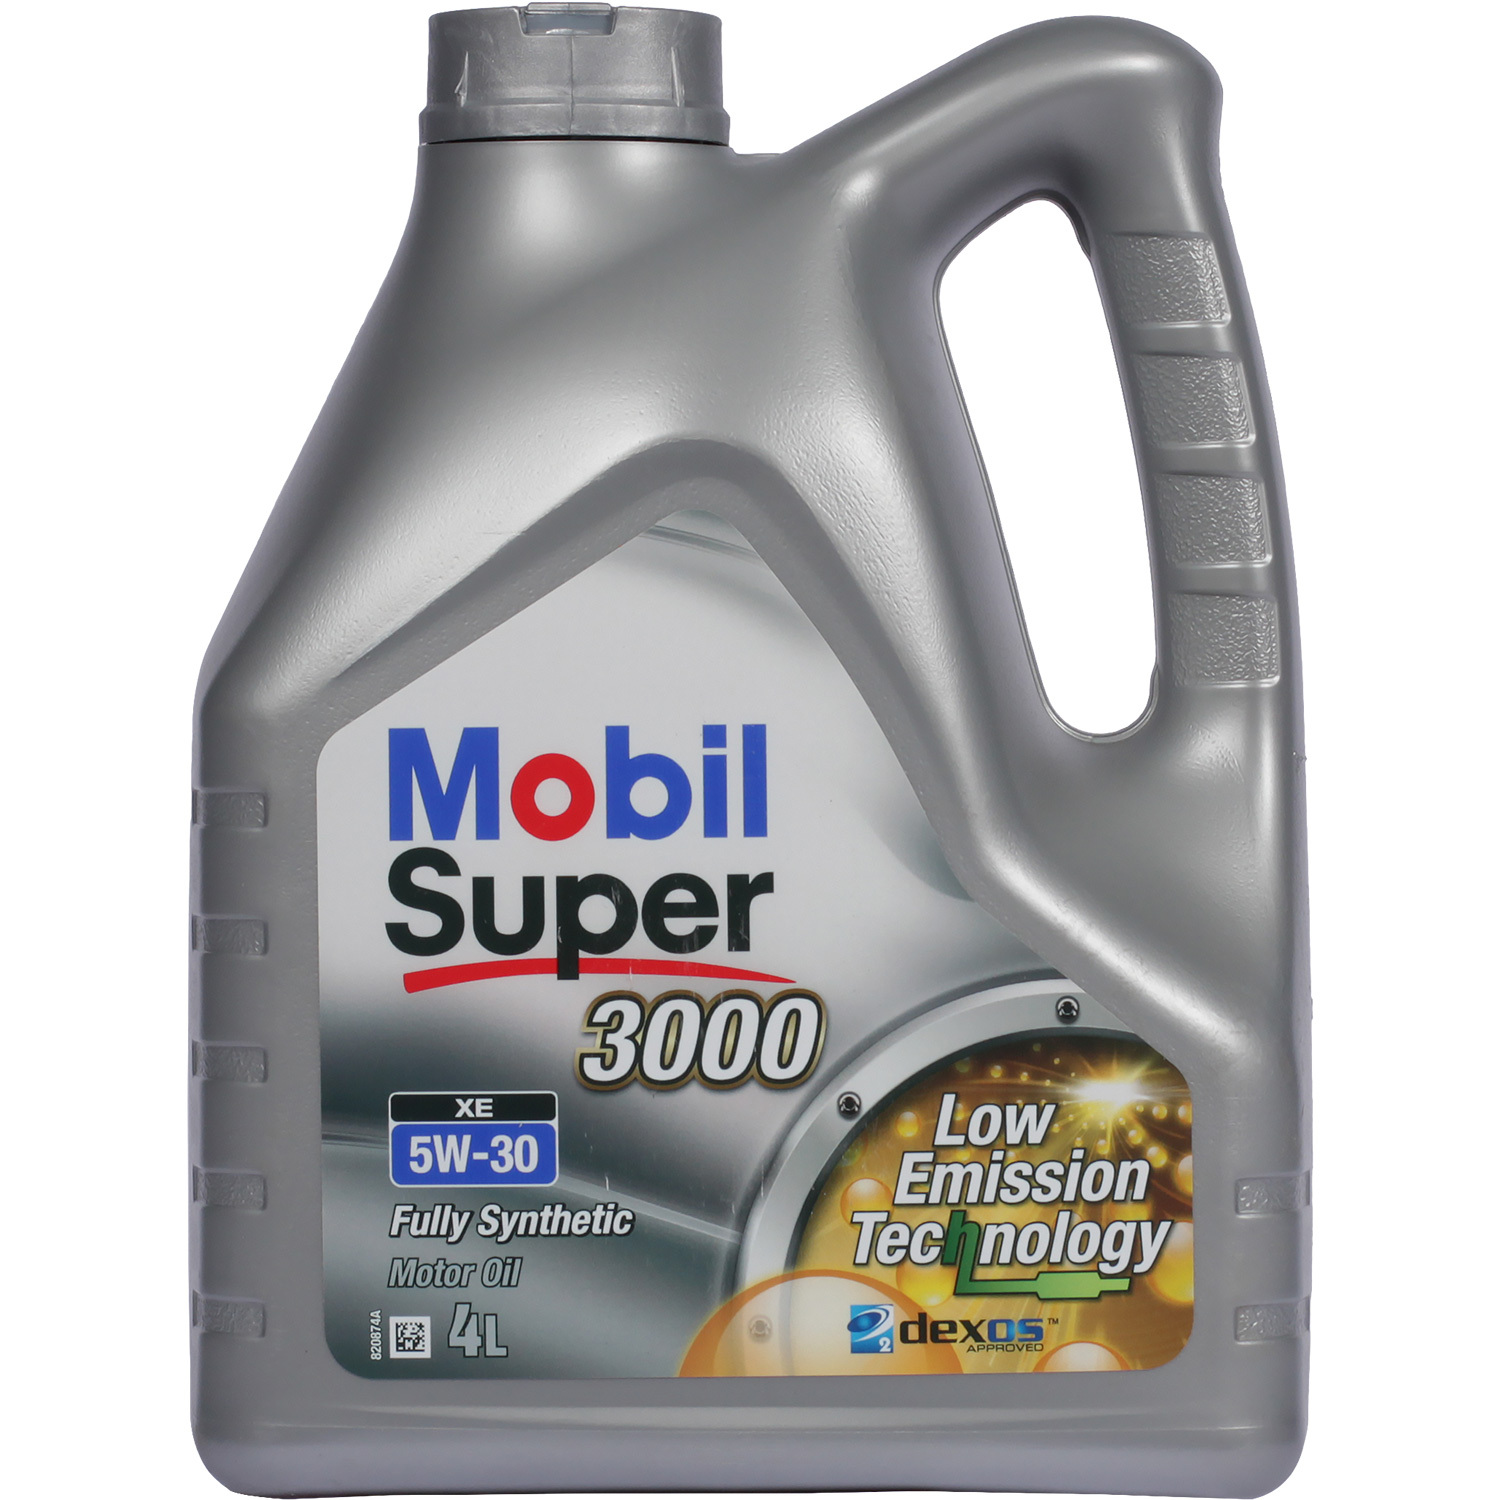 Mobil Моторное масло Mobil Super 3000 XE 5W-30, 4 л масло моторное mobil super 3000 xe 5w–30 синтетическое 4 л